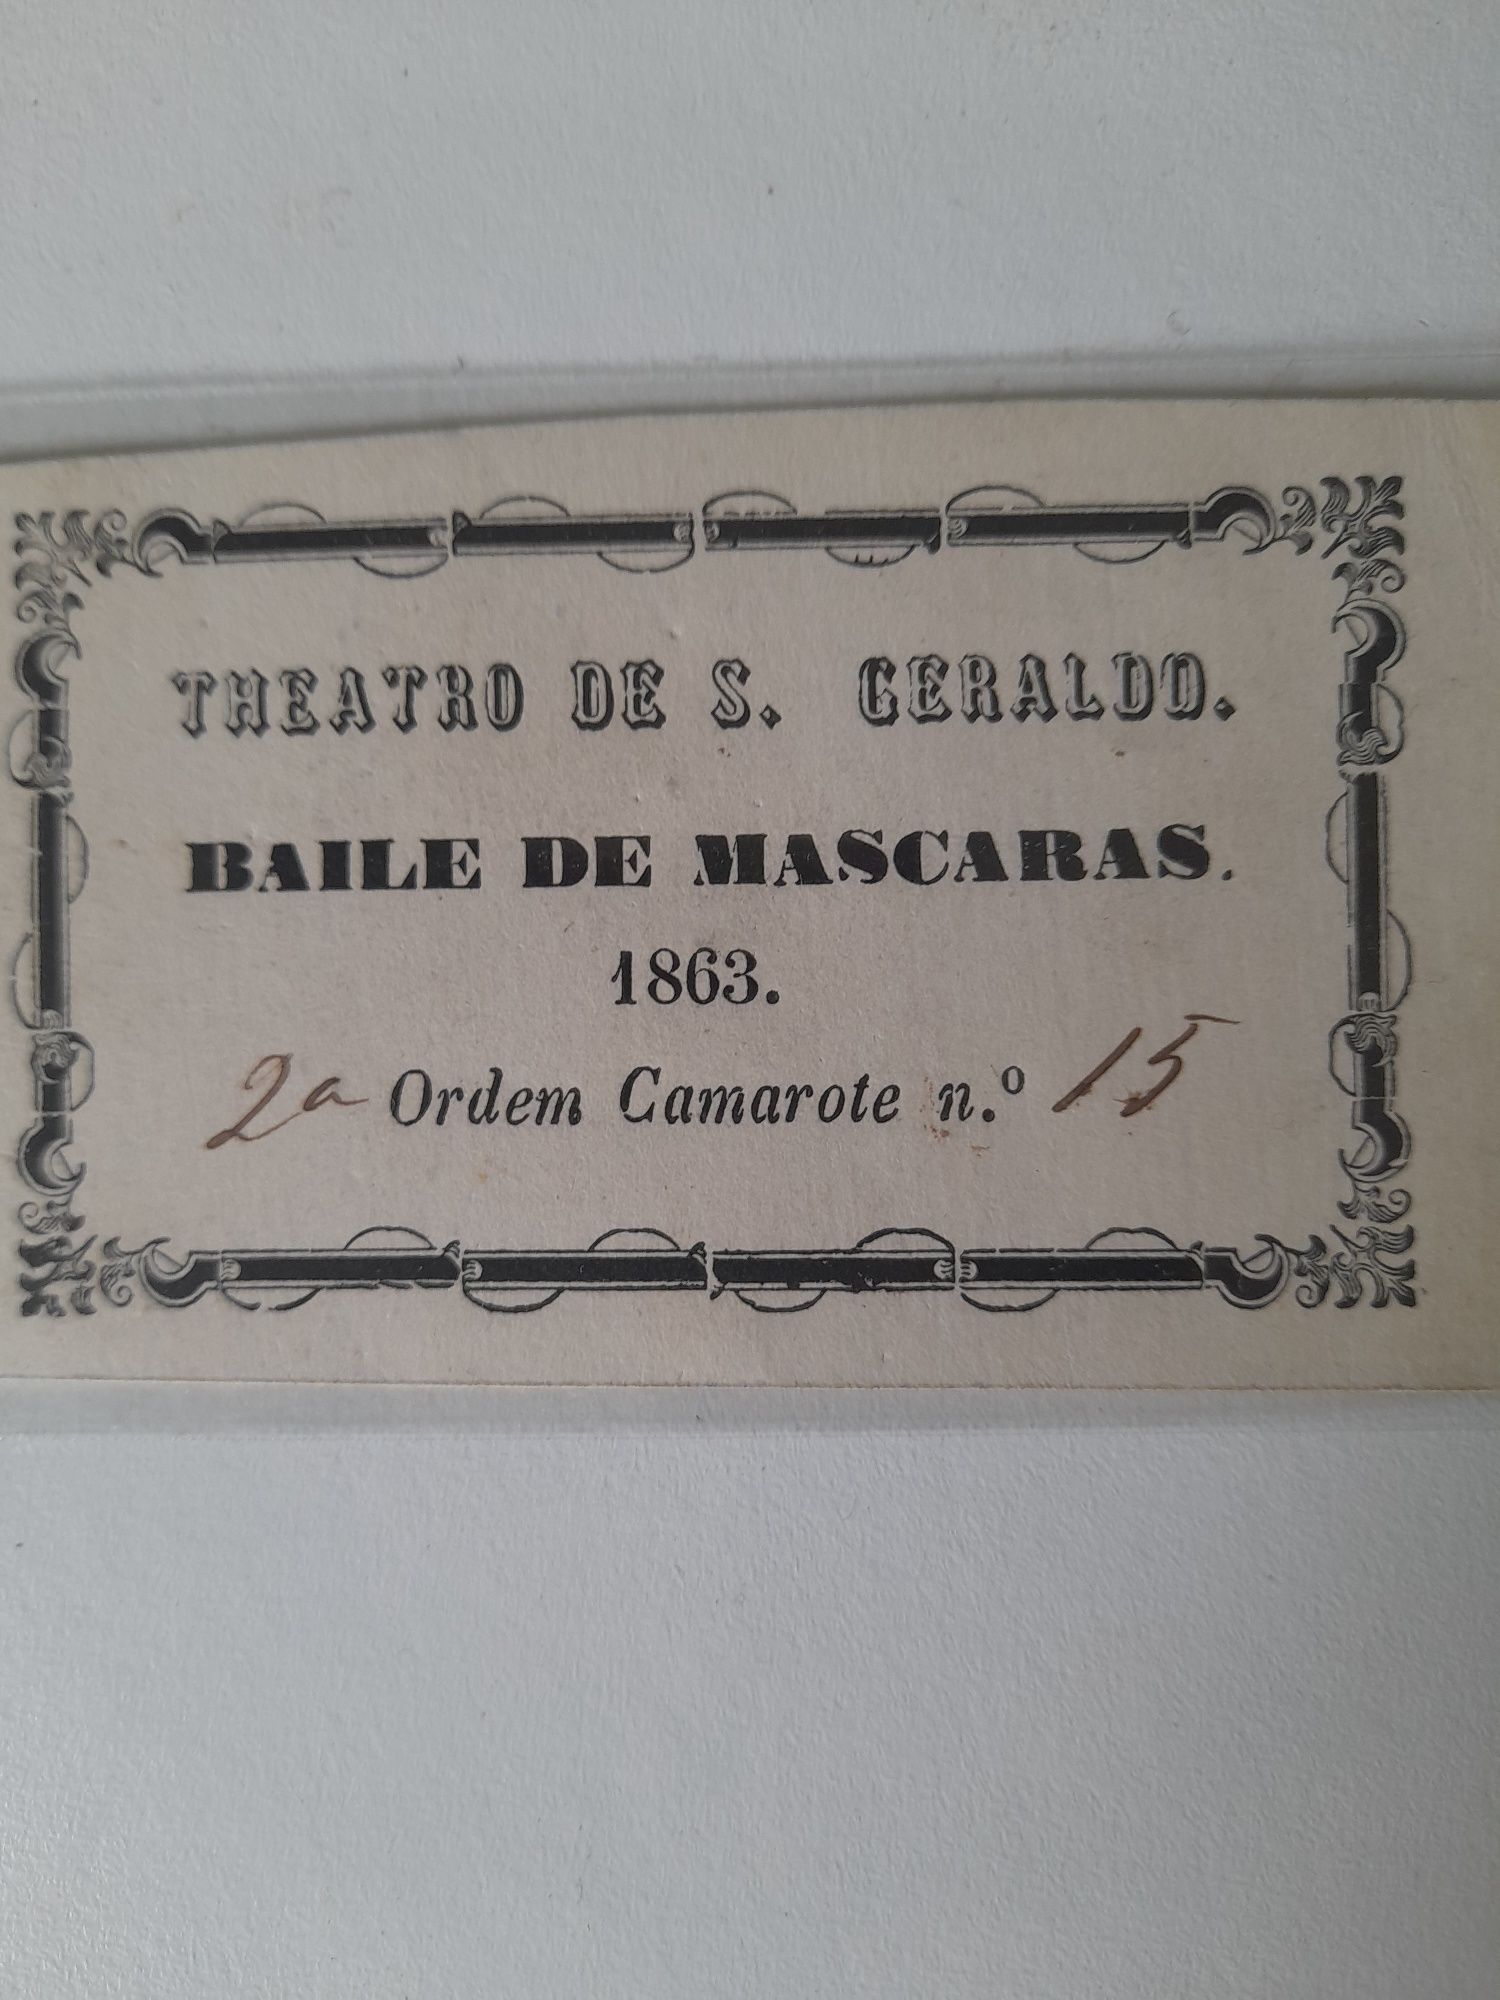 Theatro de S. Geraldo- Bilhete para Baile de Mascaras 1863